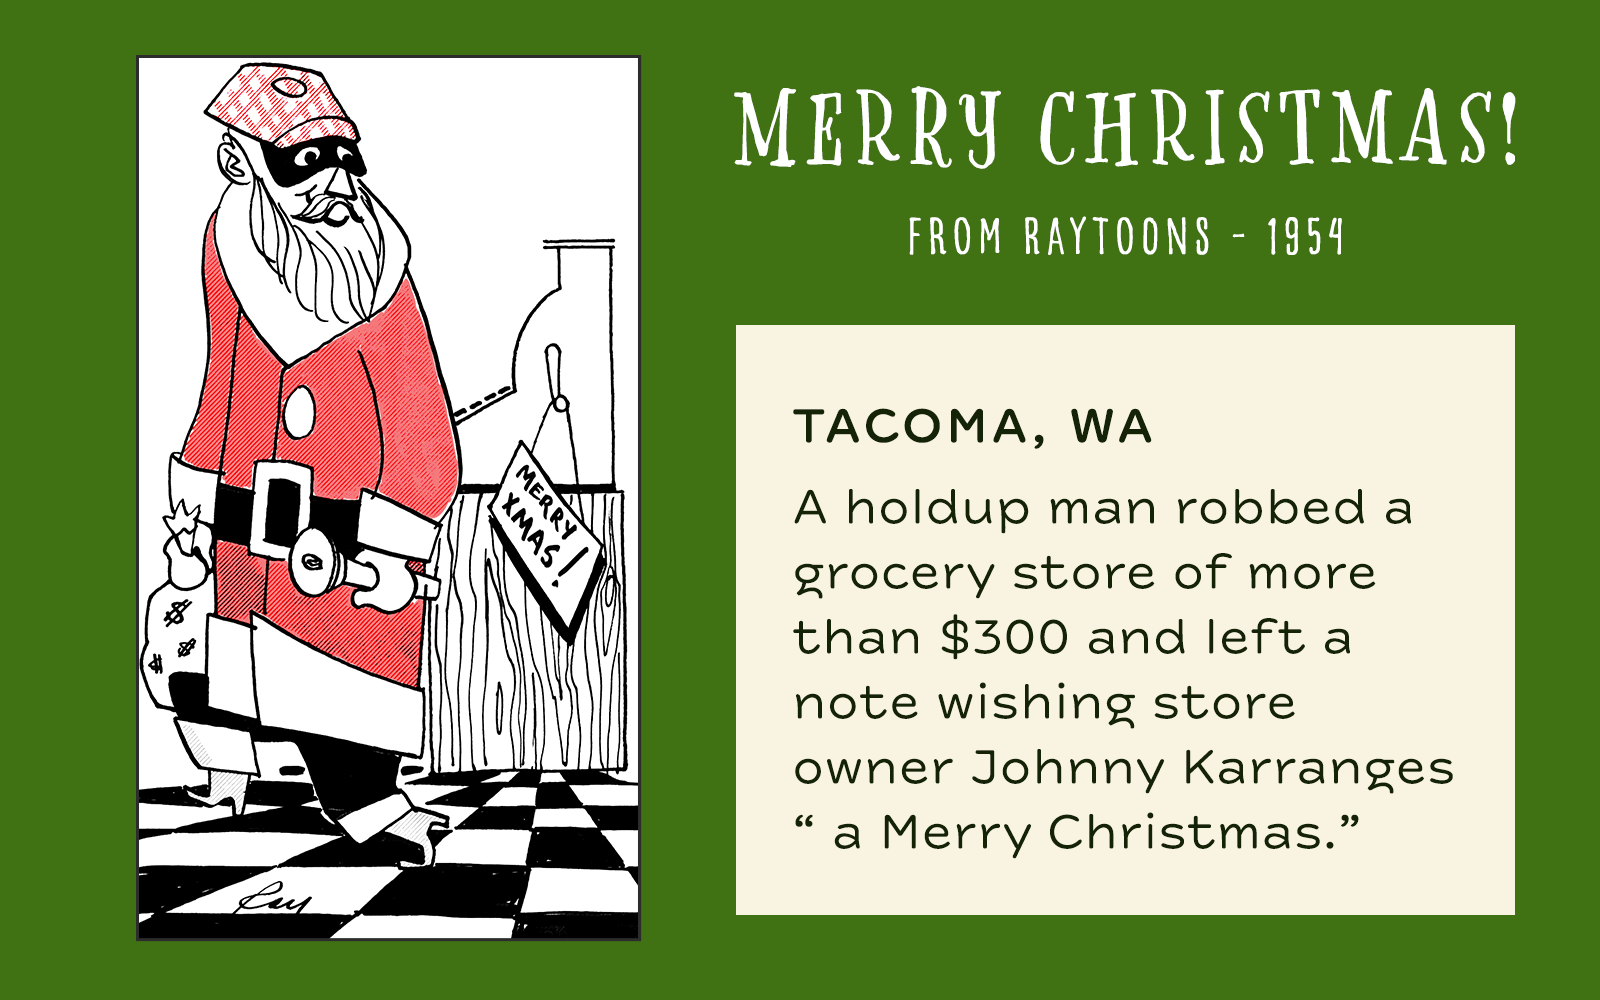 Merry Christmas from Raytoons -1954